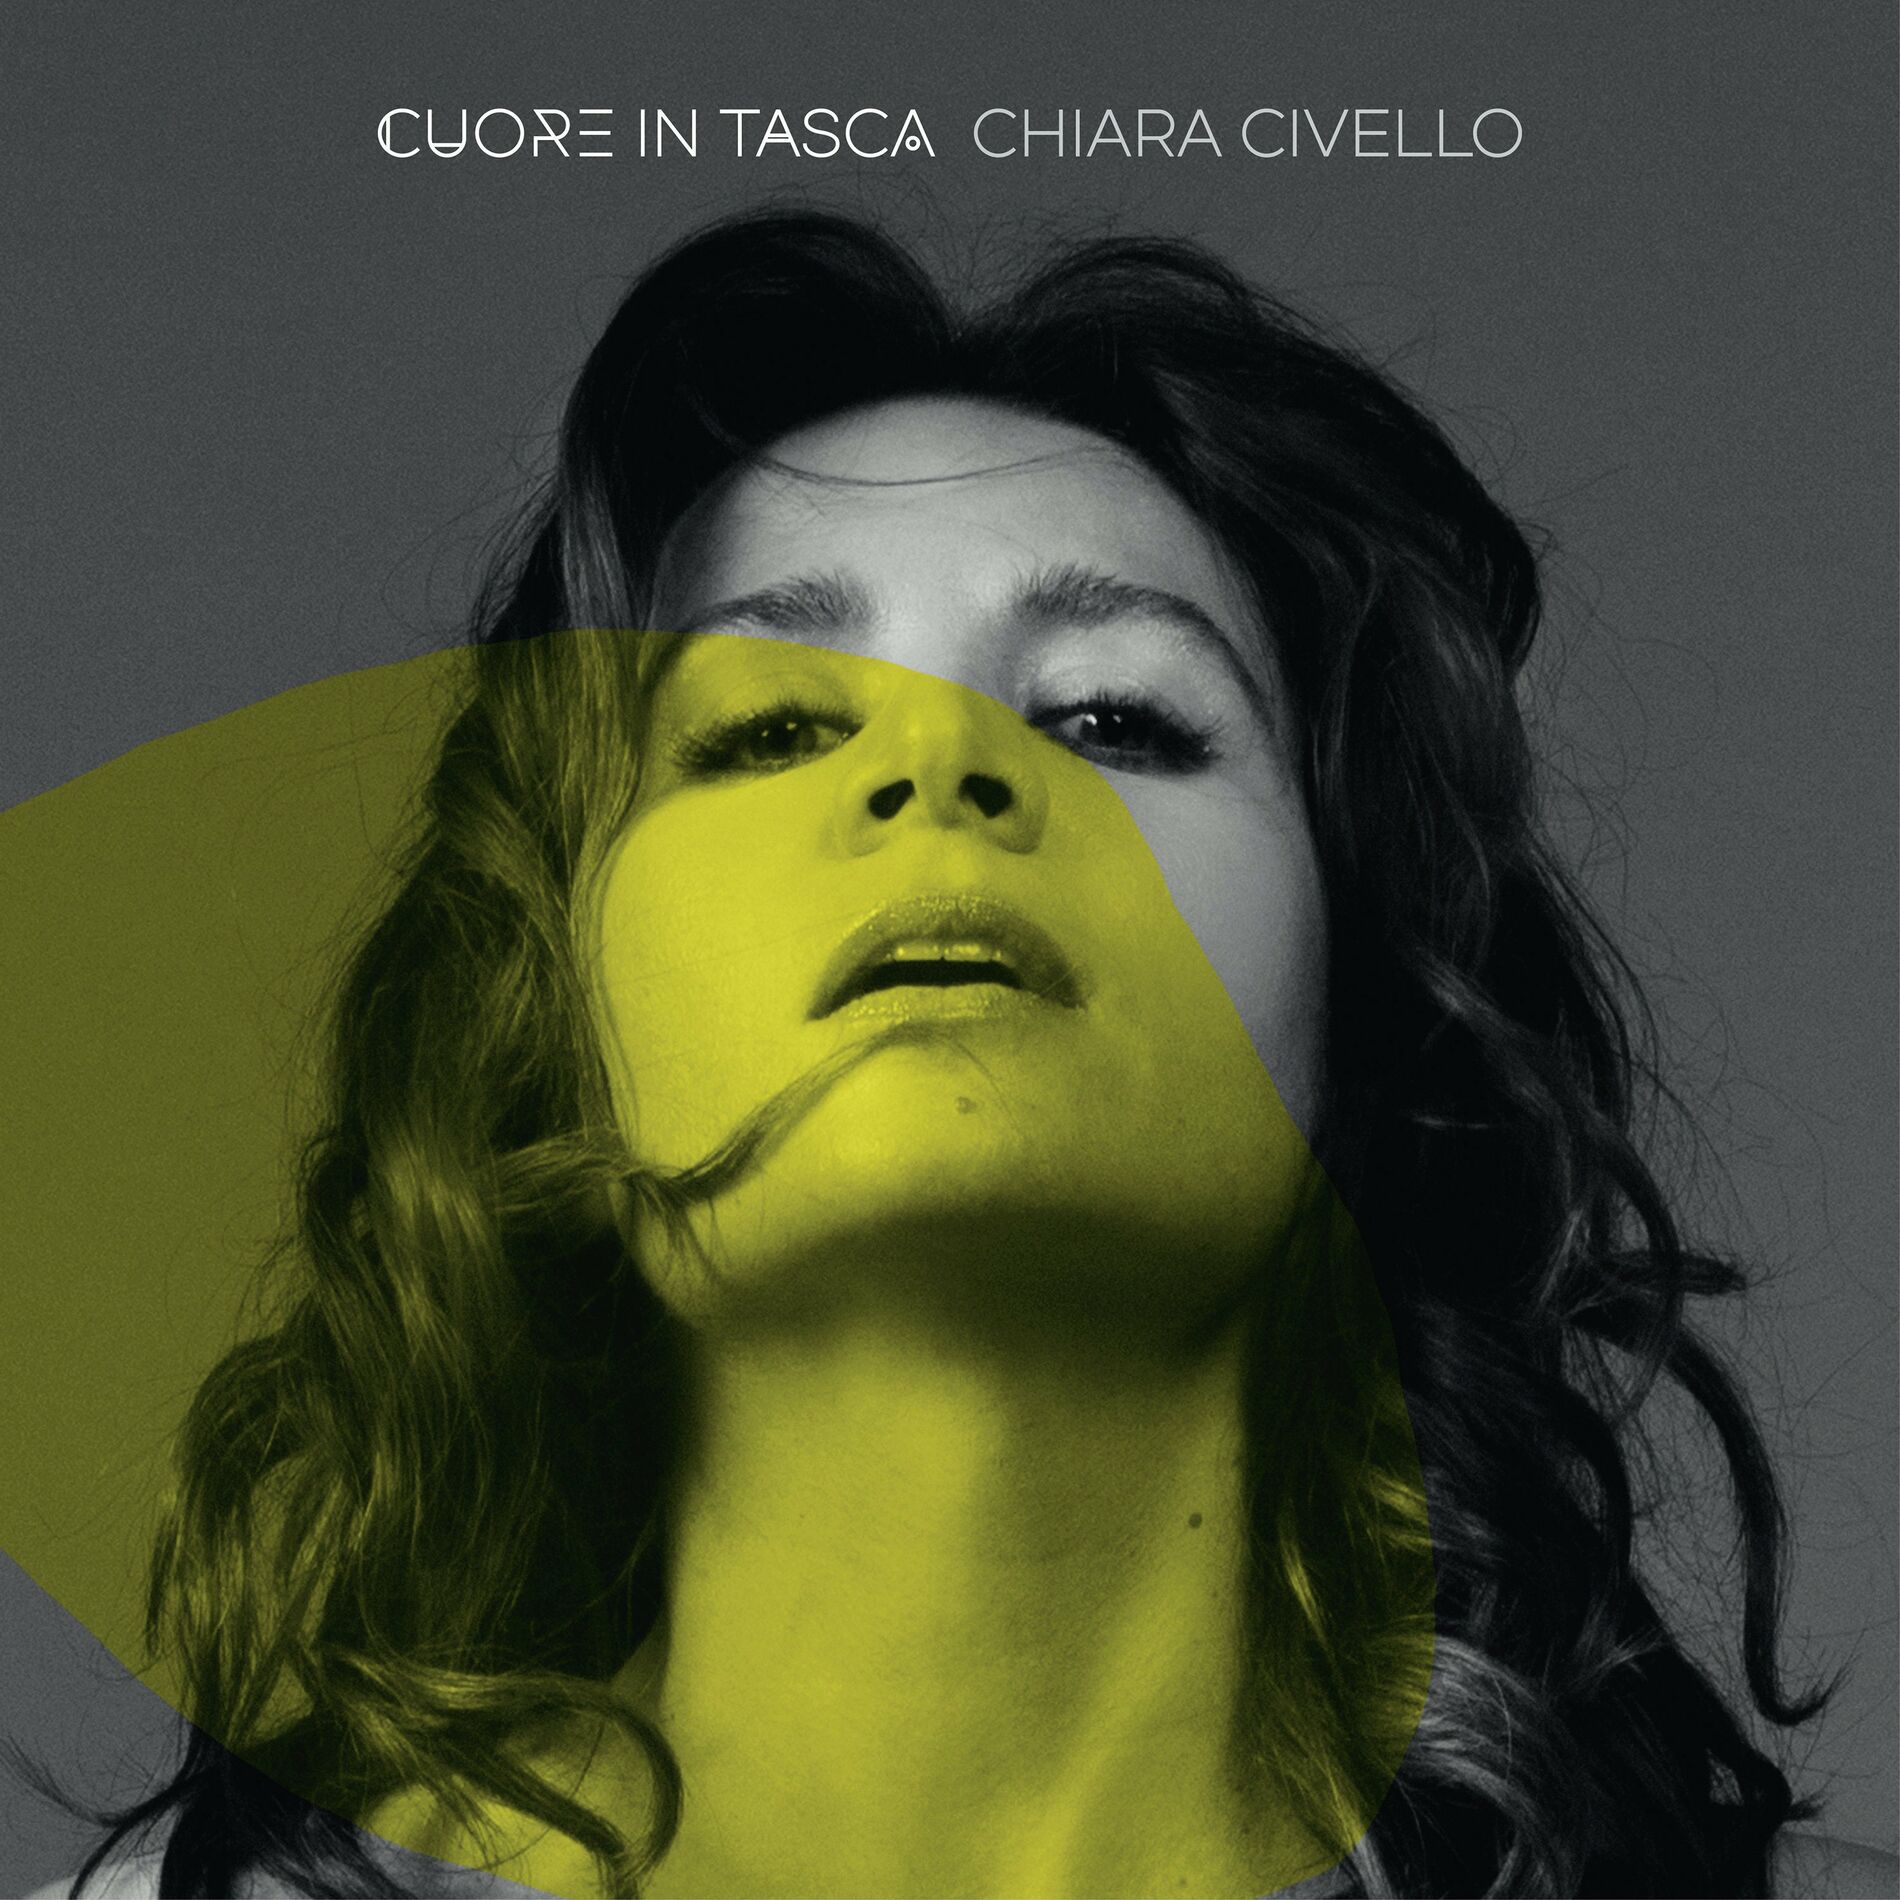 Chiara Civello: albums